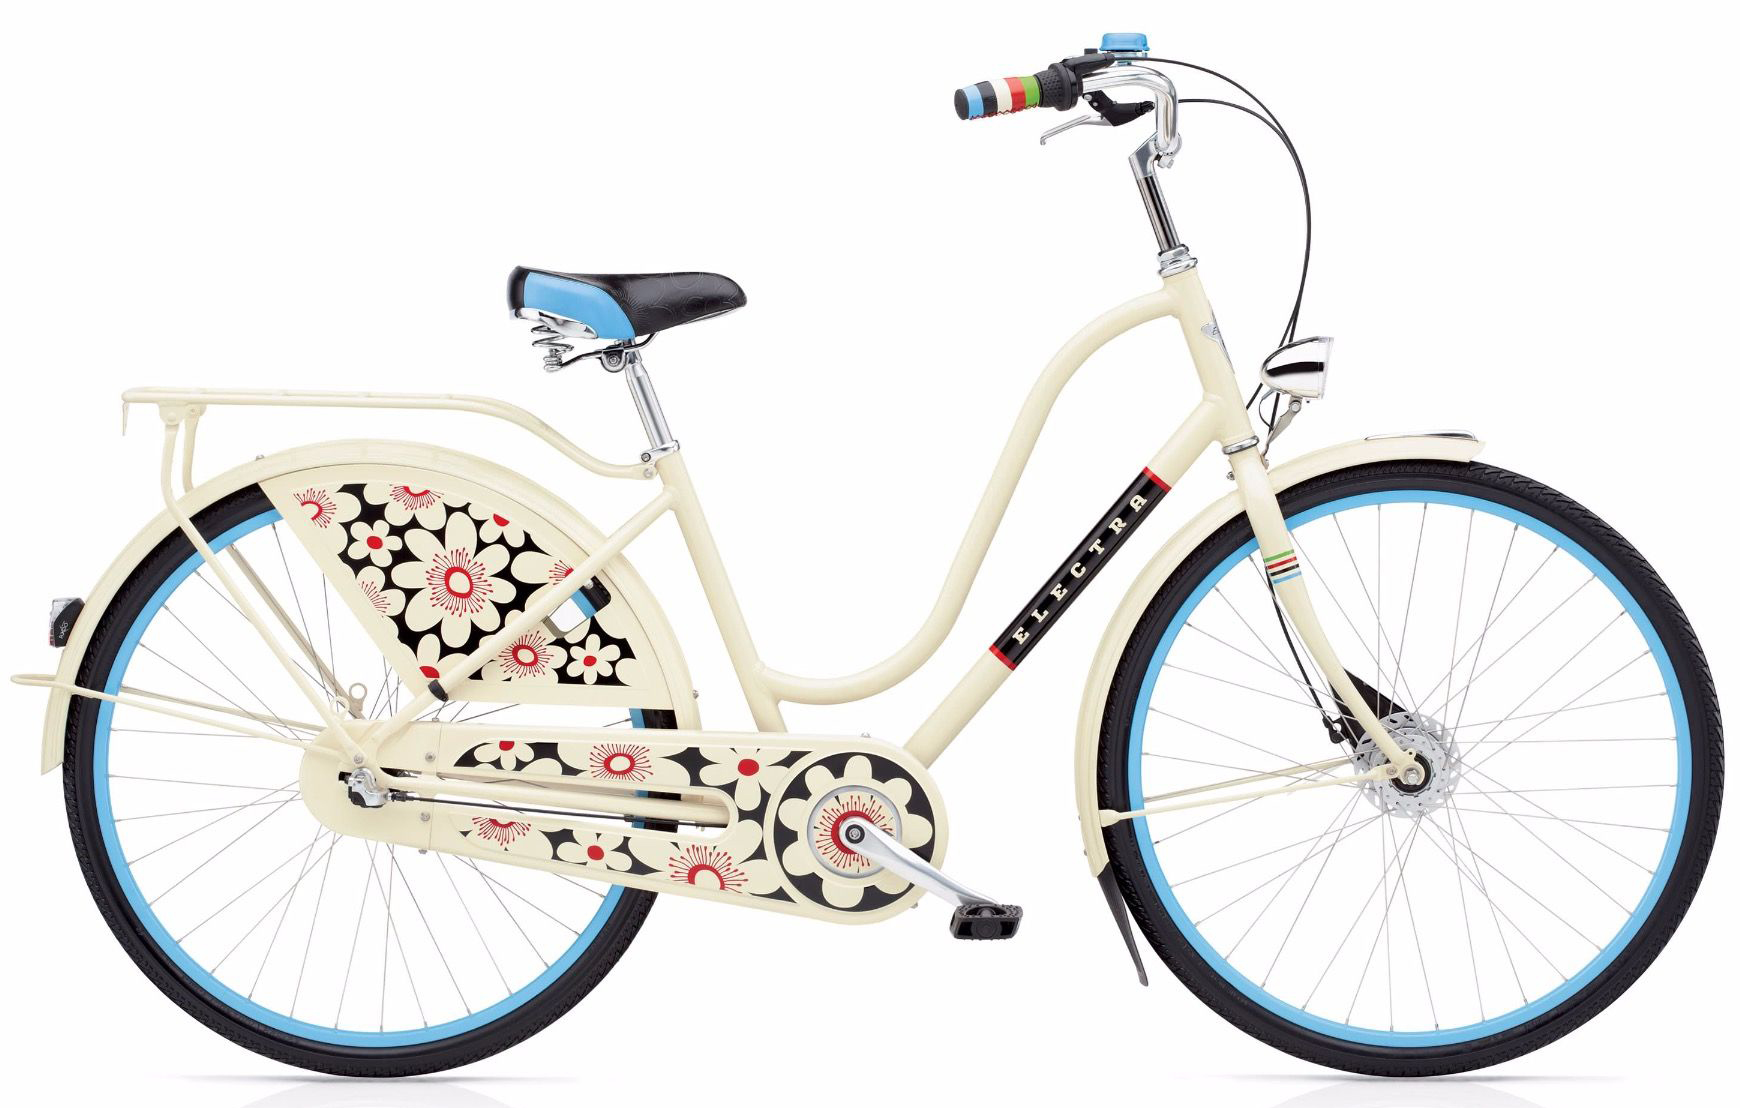  Отзывы о Женском велосипеде Electra Amsterdam Fashion 7i Bloom Ladies 2019